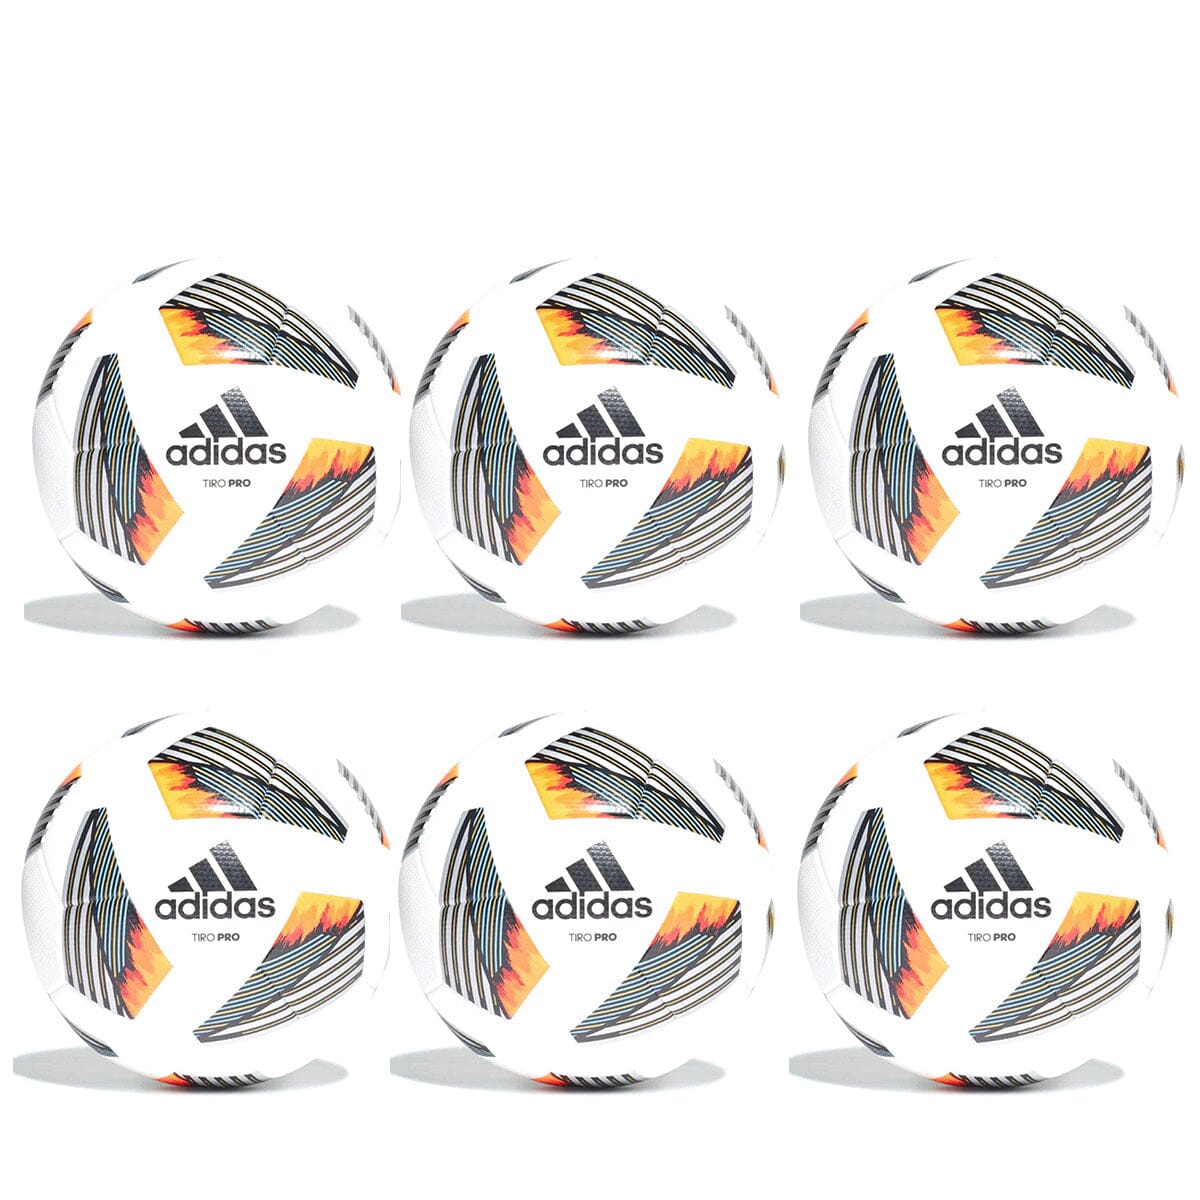 adidas Tiro Pro Ball | FS0373 - 6 Packs Soccer Ball Adidas 5 White / Black / Team Light Blue / Metallic Silver 